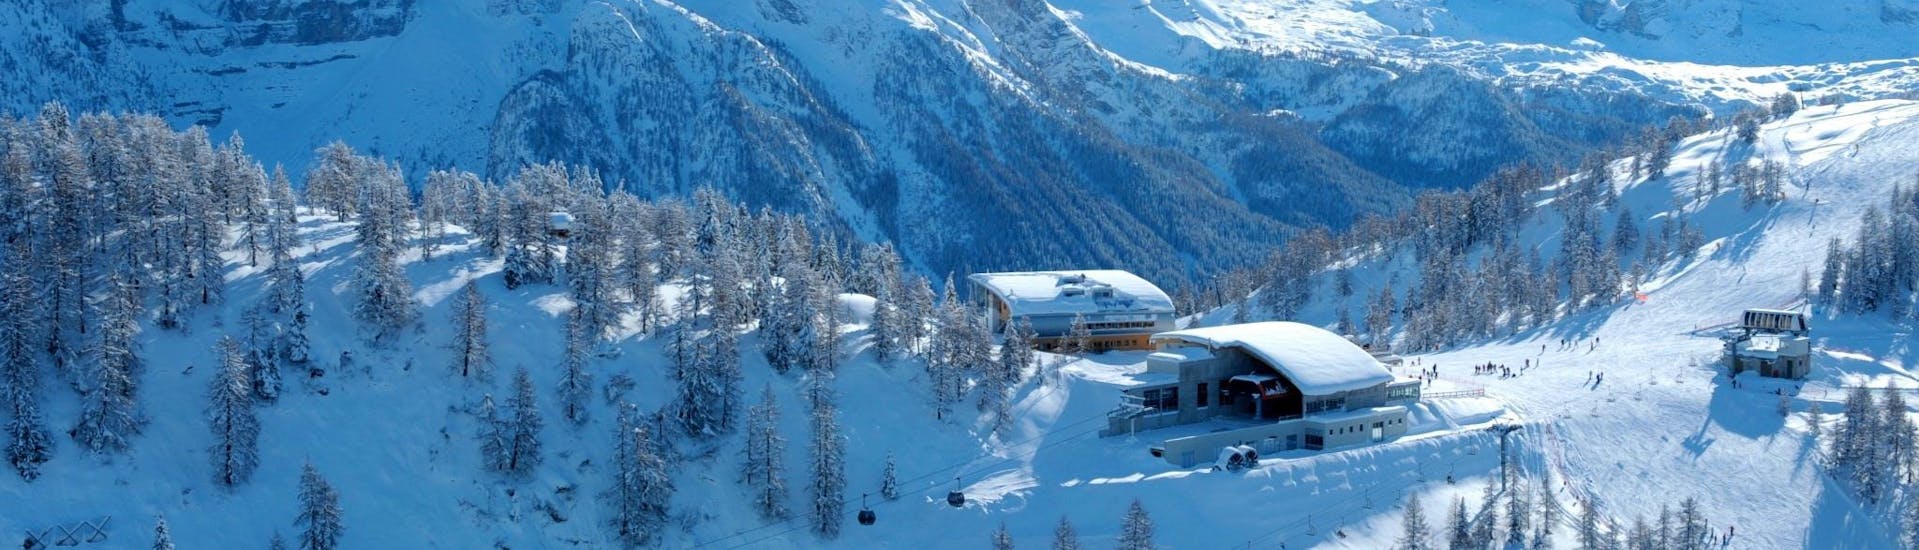 Top view of the Marilleva ski resort where Scuola Italiana Sci Marilleva is doing ski lessons.